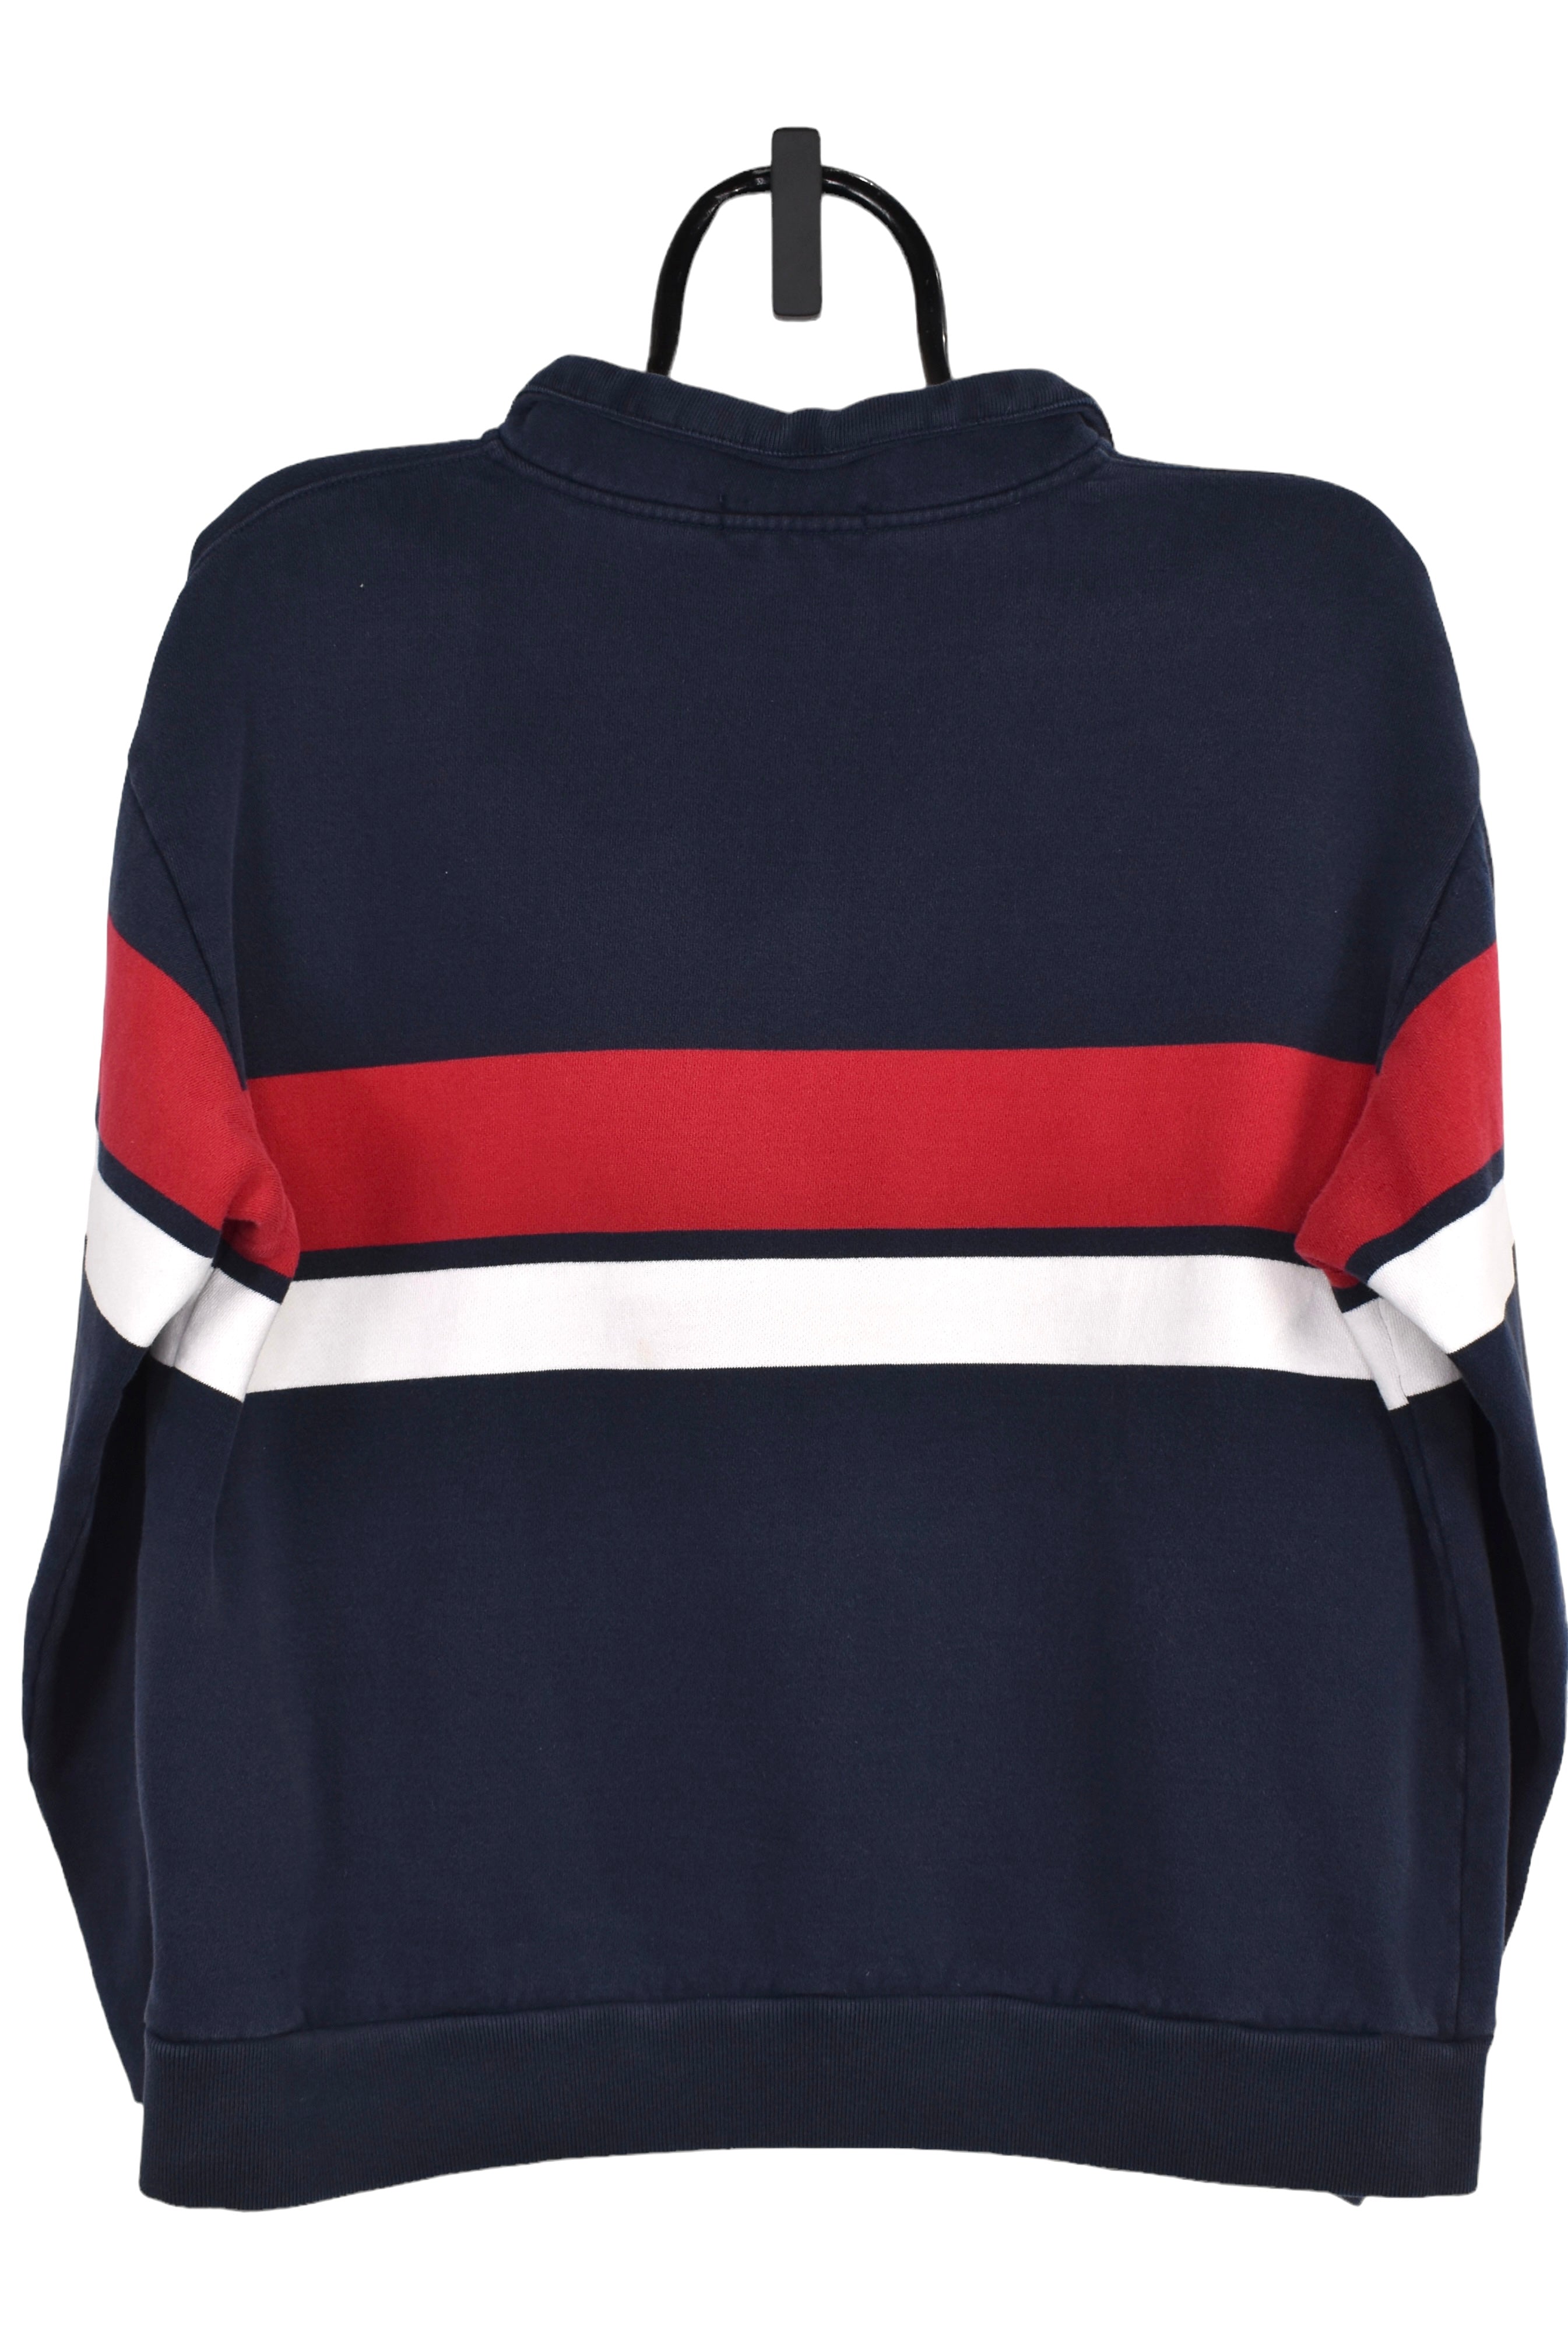 Vintage Nautica quarter zip (M), navy embroidered sweatshirt